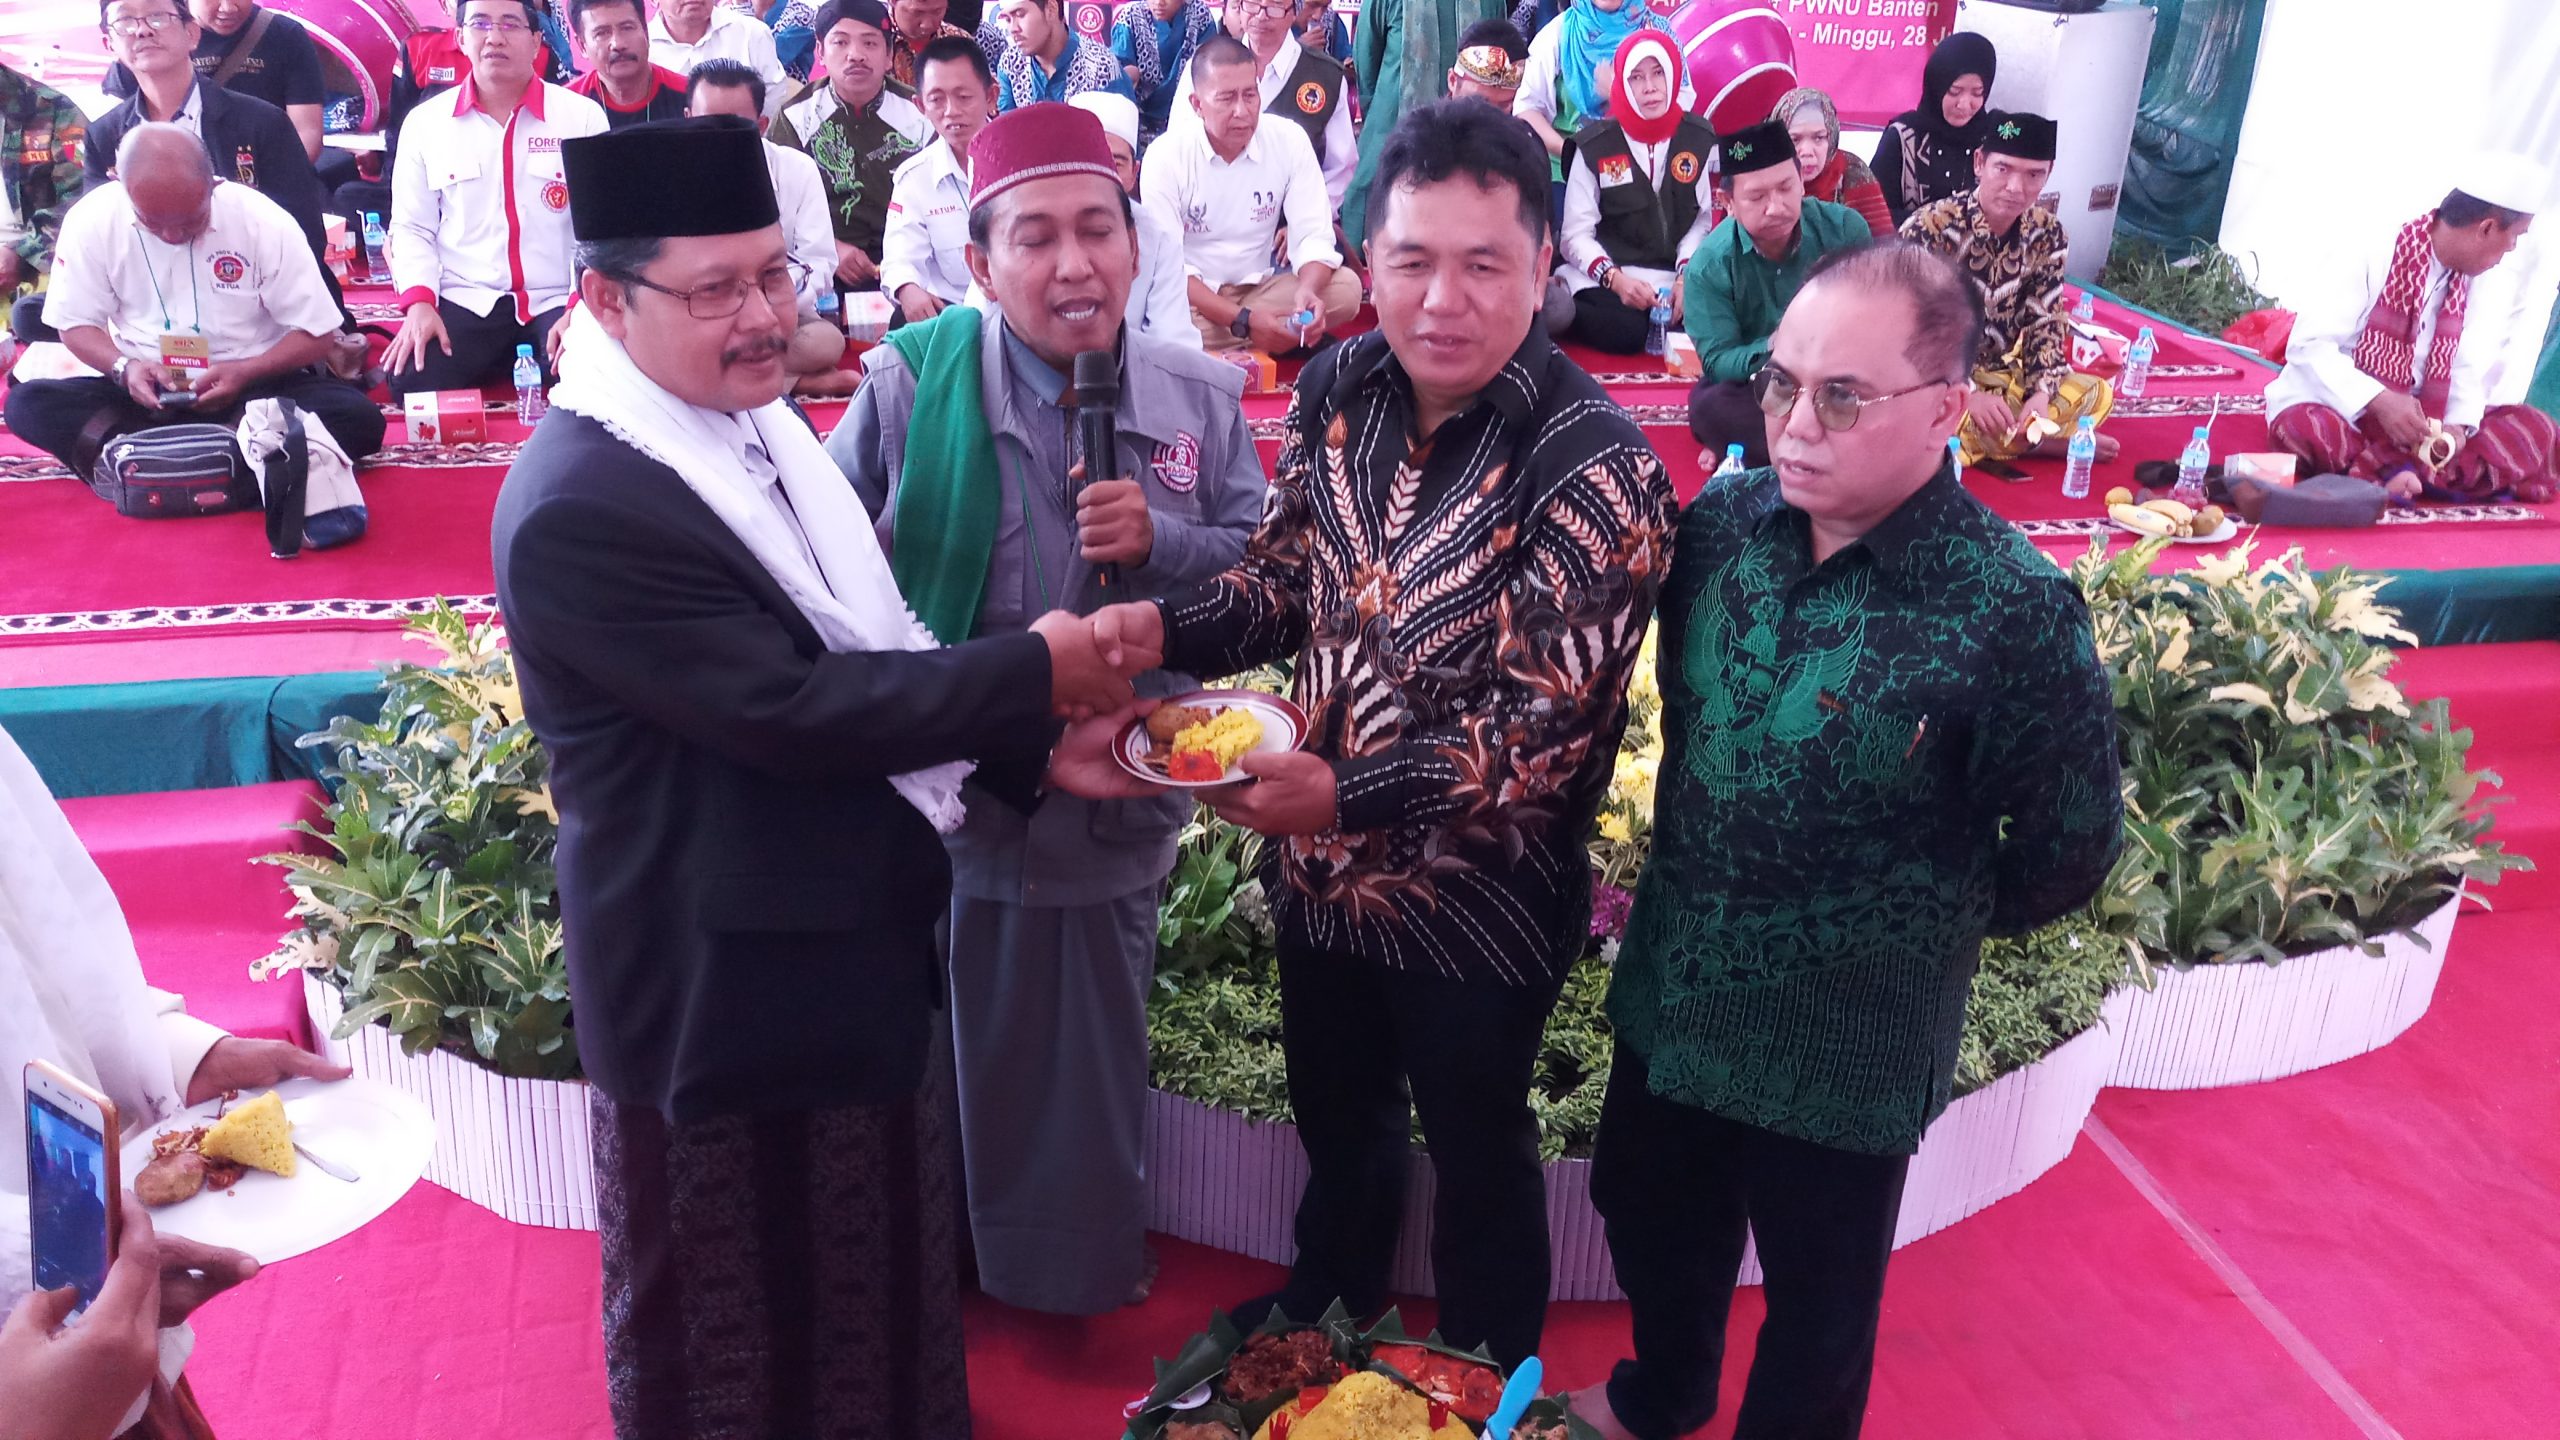 Penanggungjawab Tunggal ARJ, Haidar Alwi (kanan, batik hijau) bersama Ketua PWNU Provinsi Banten, KH Bunyamin (kiri) dalam acara santunan seribu anak yatim di Kota Serang, Minggu (28/7/2019).